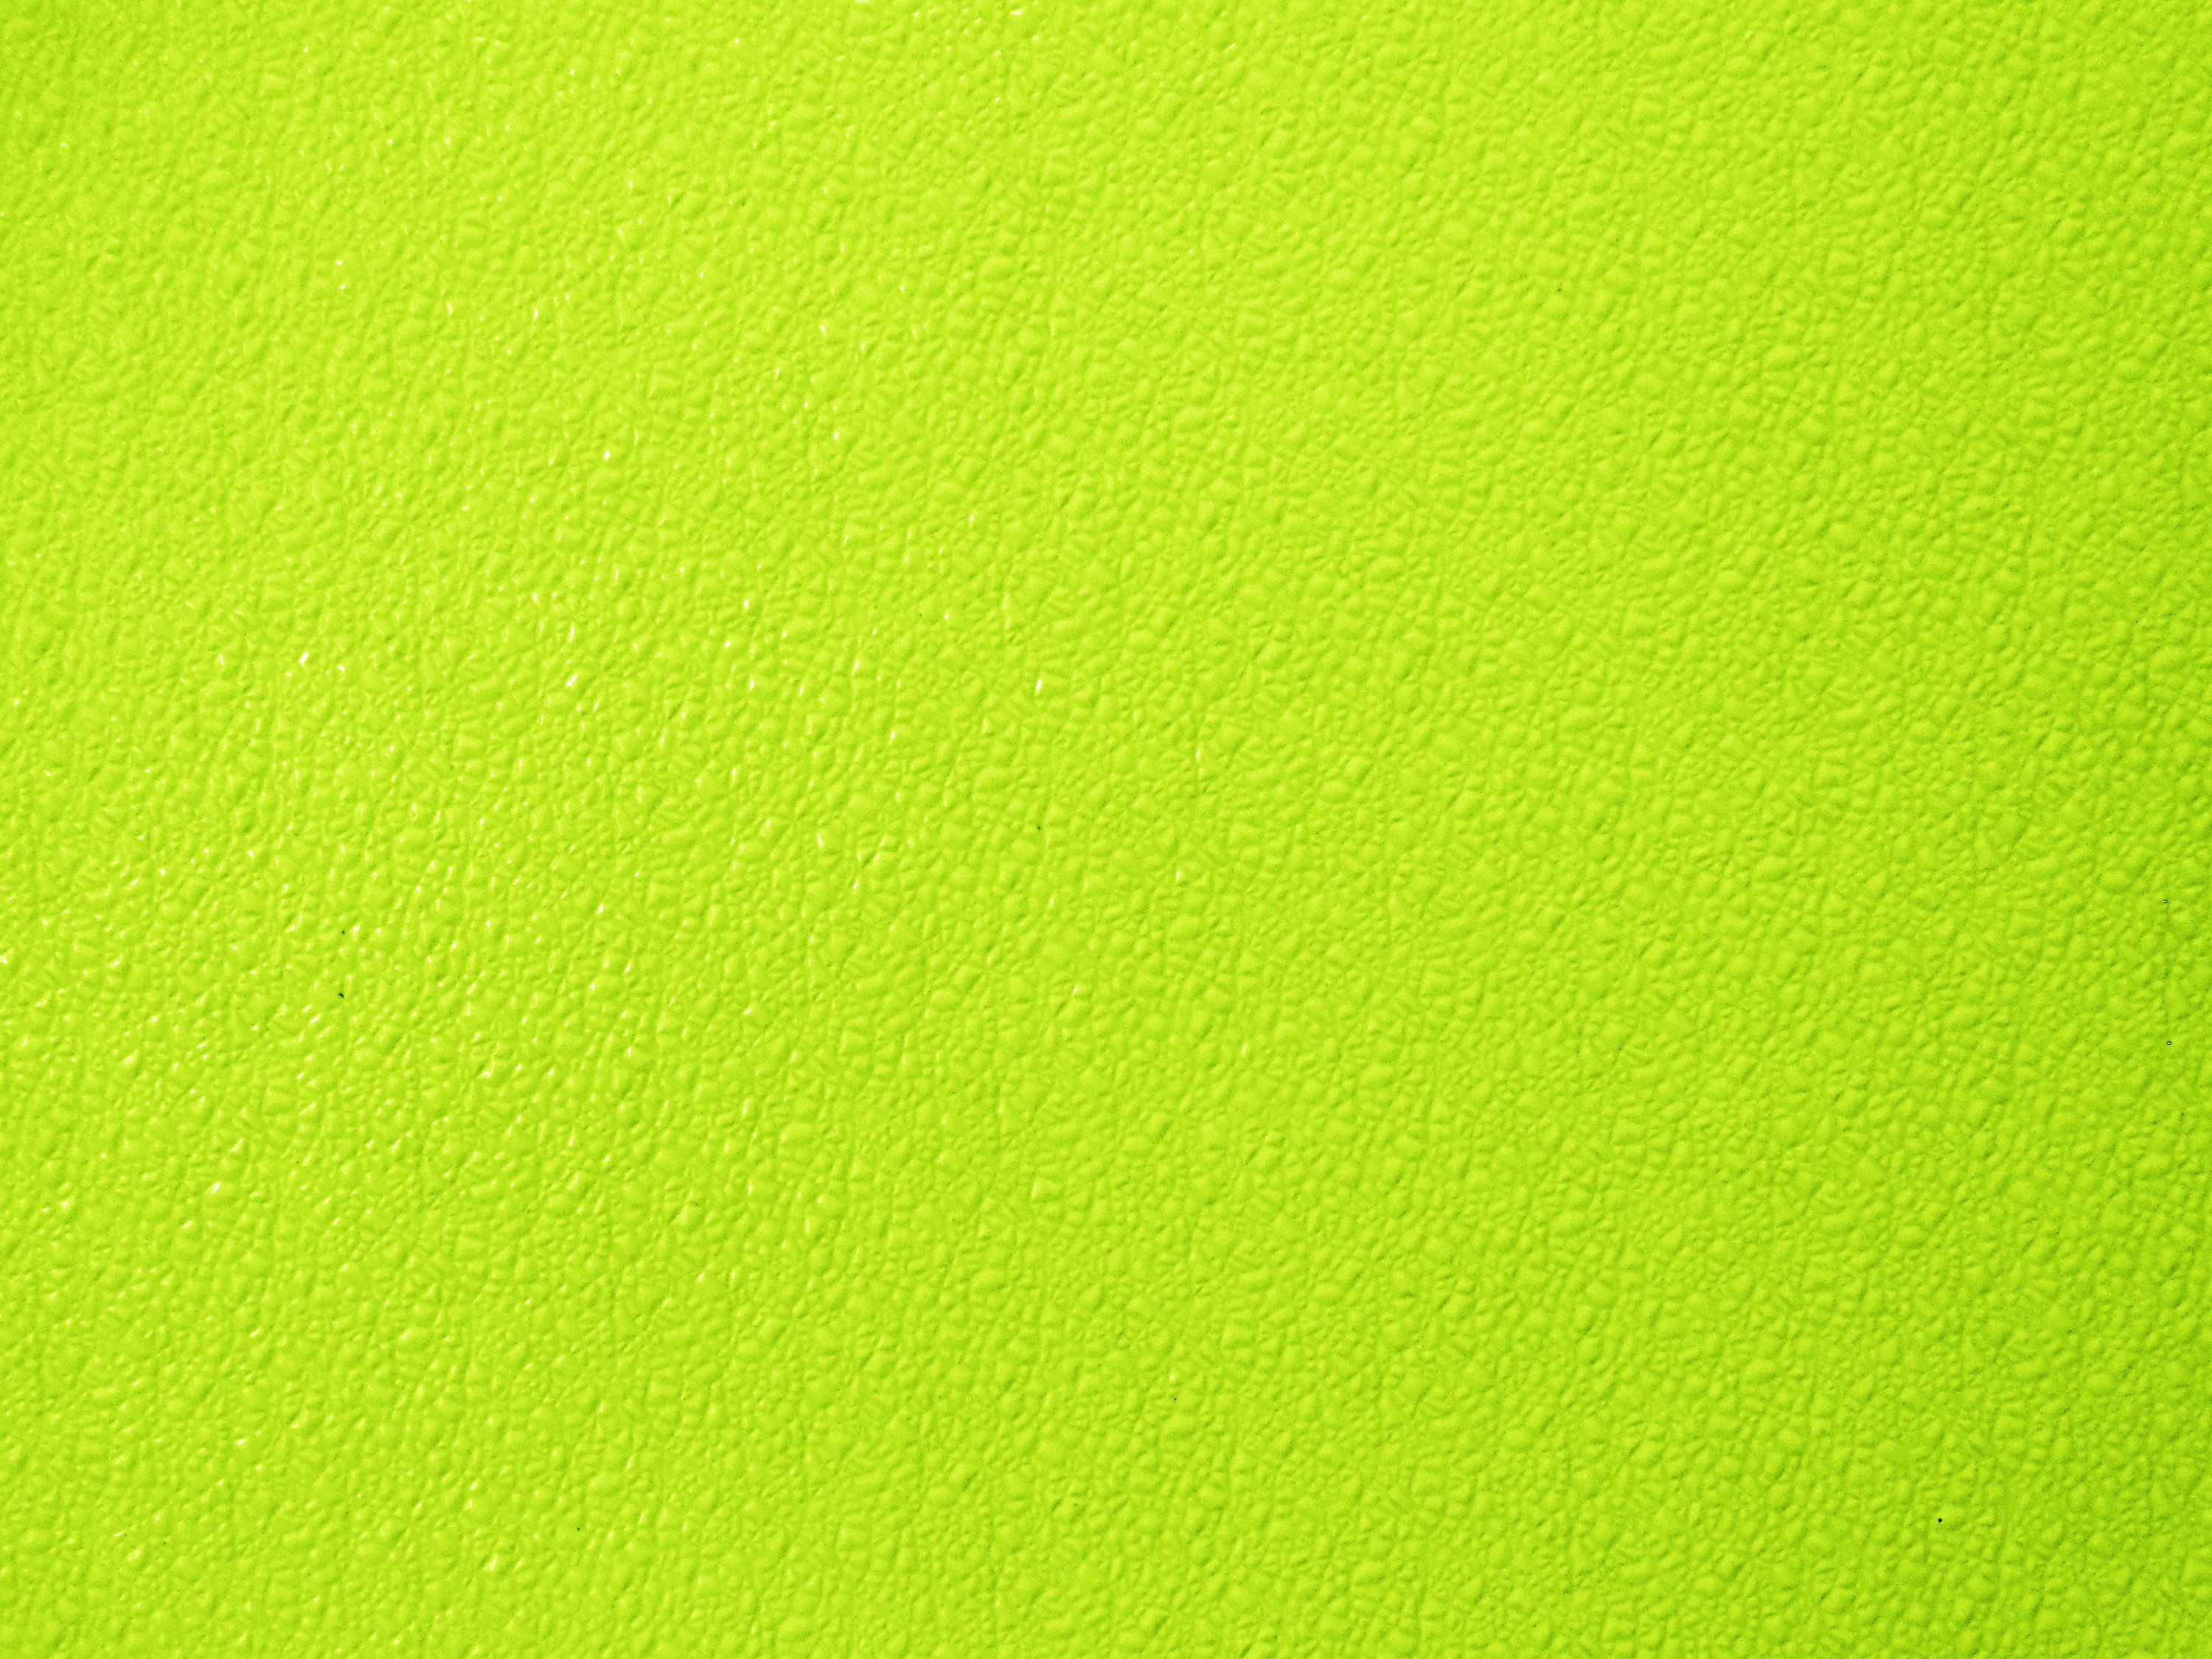 Fluo Yellow Plastic Texture Useful Background Stock Photo